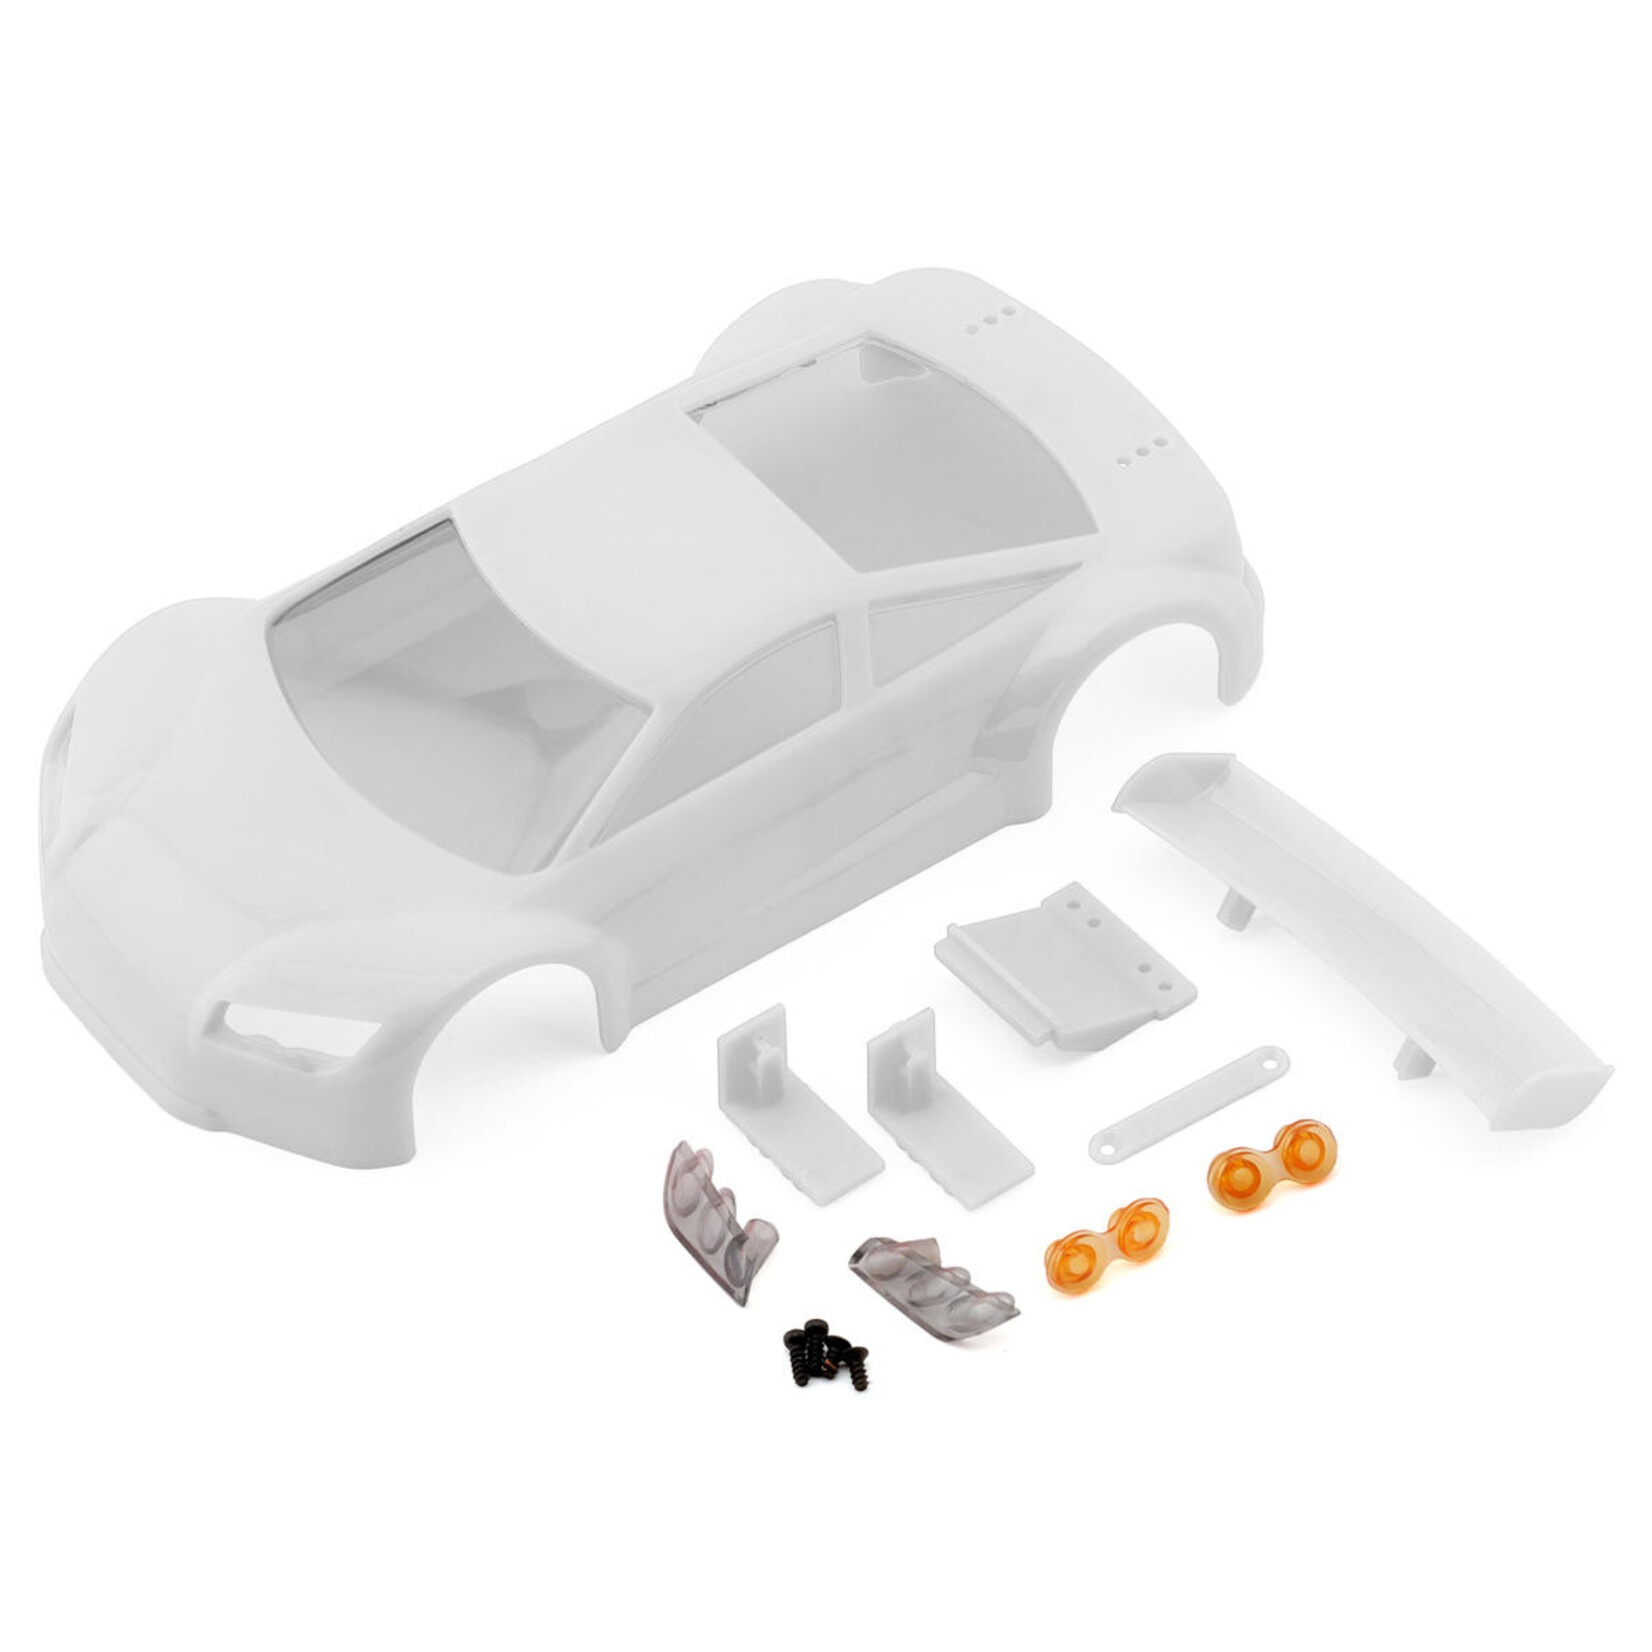 JOMUREMA Mini-Z GT01 Car Body Set (White) #JOM280354 - Hobby Time RC